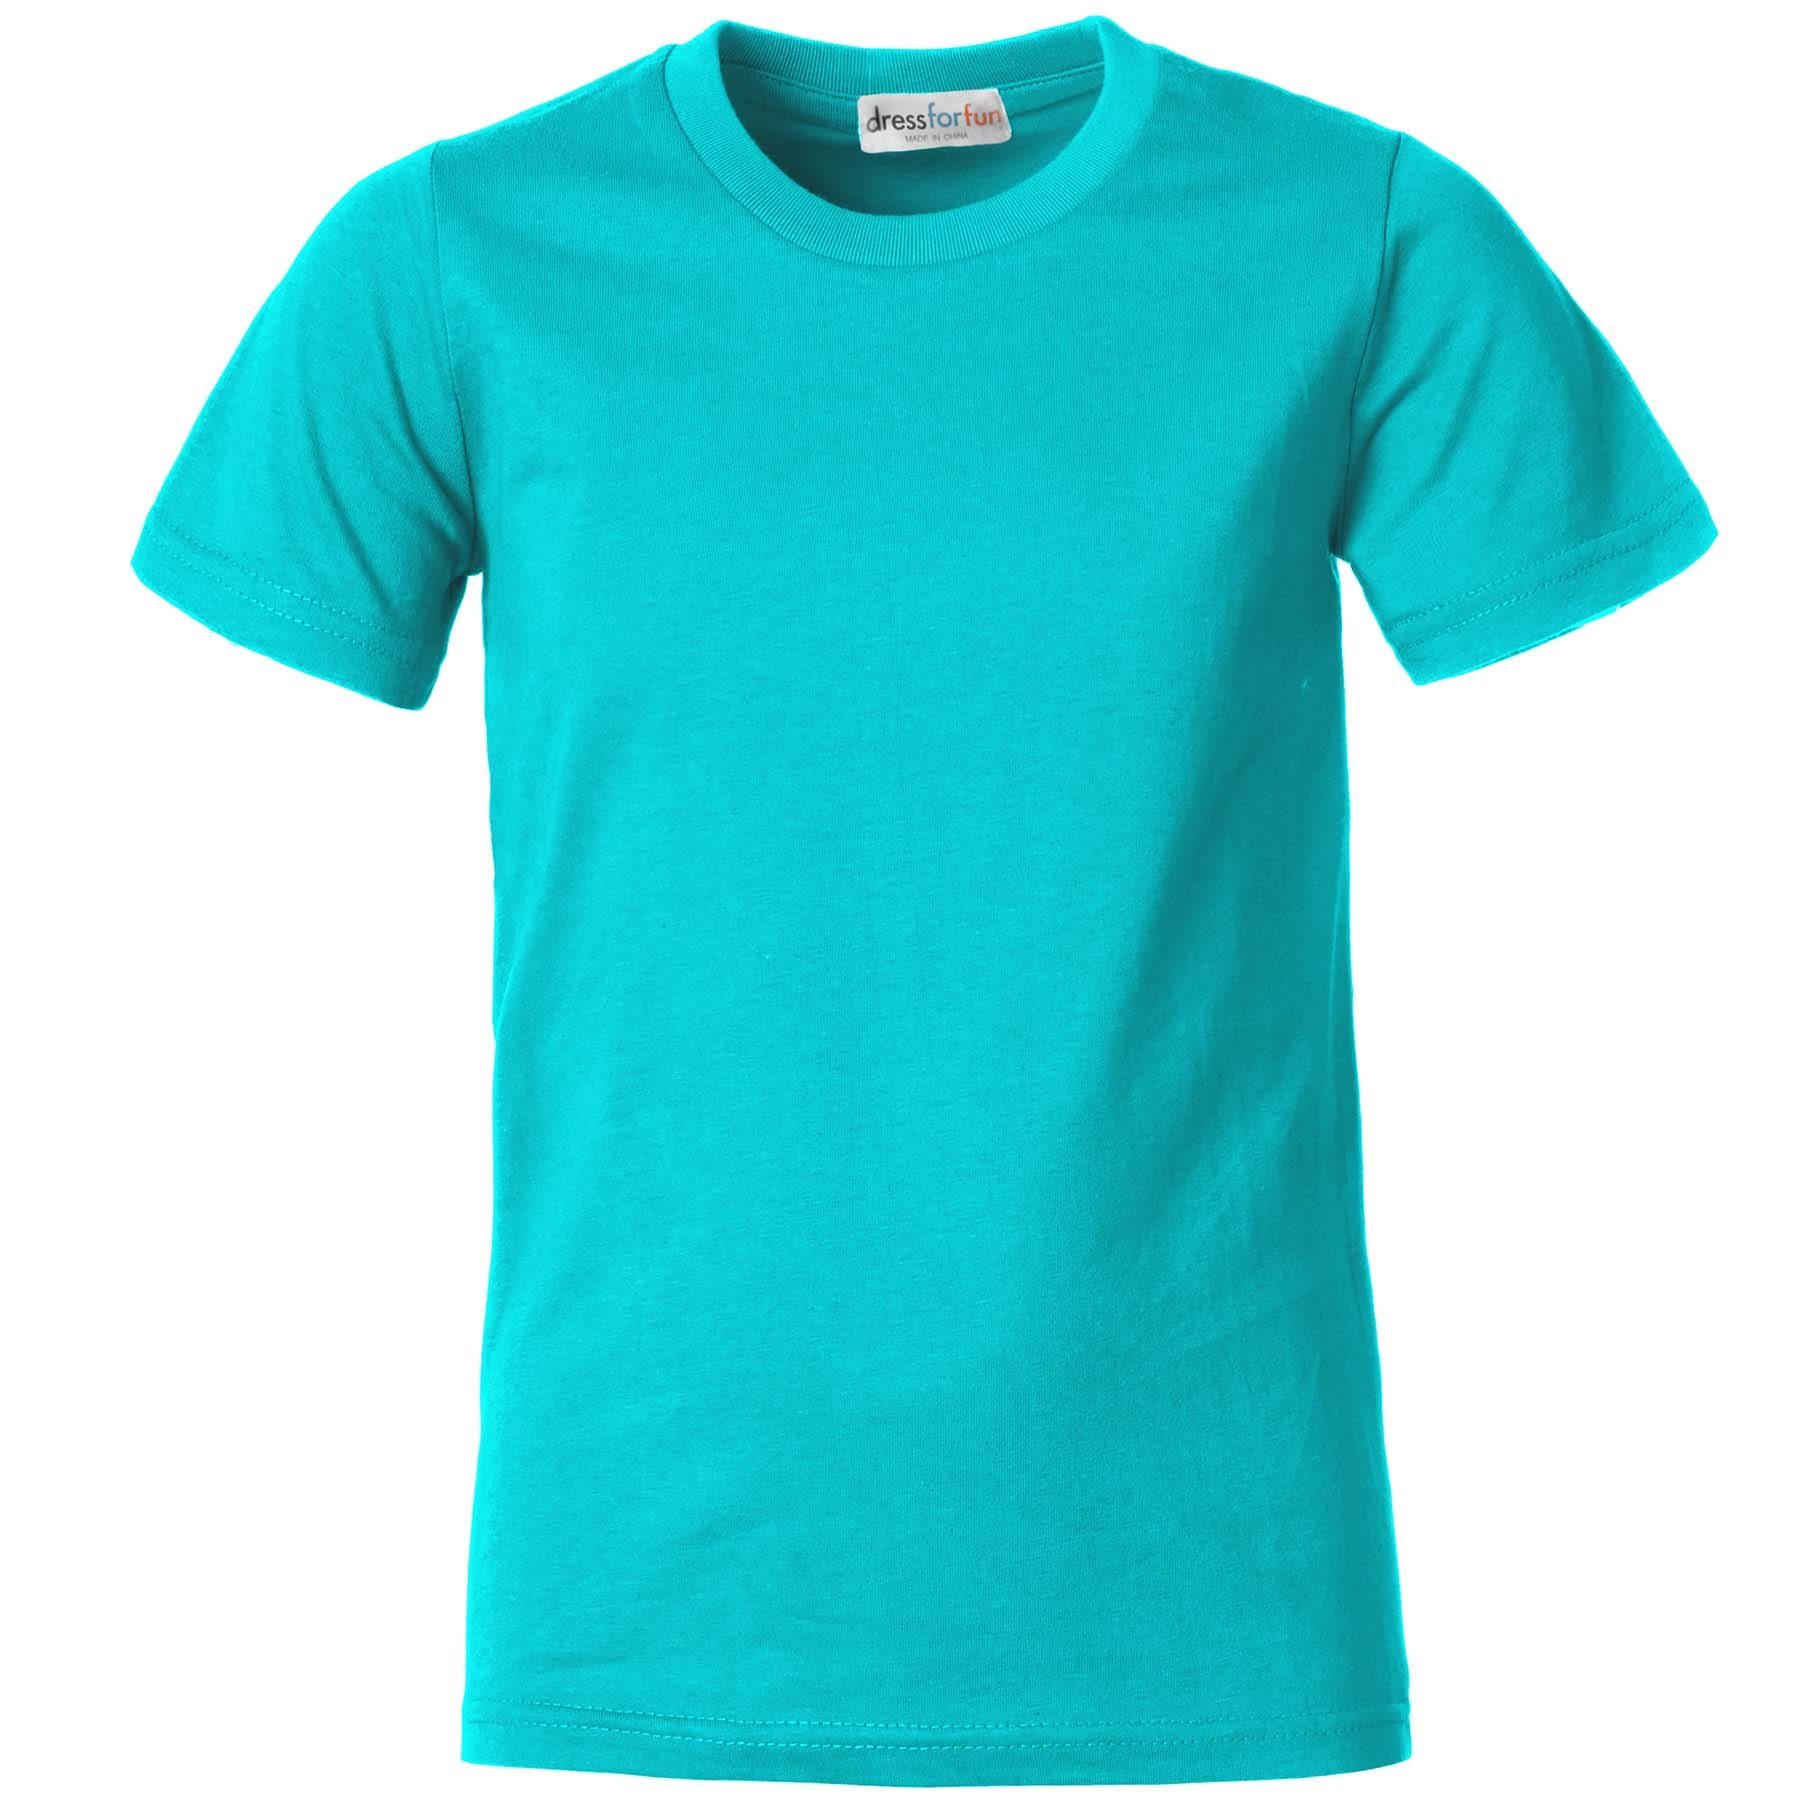 dressforfun Rundhals T-Shirt türkis T-Shirt Männer